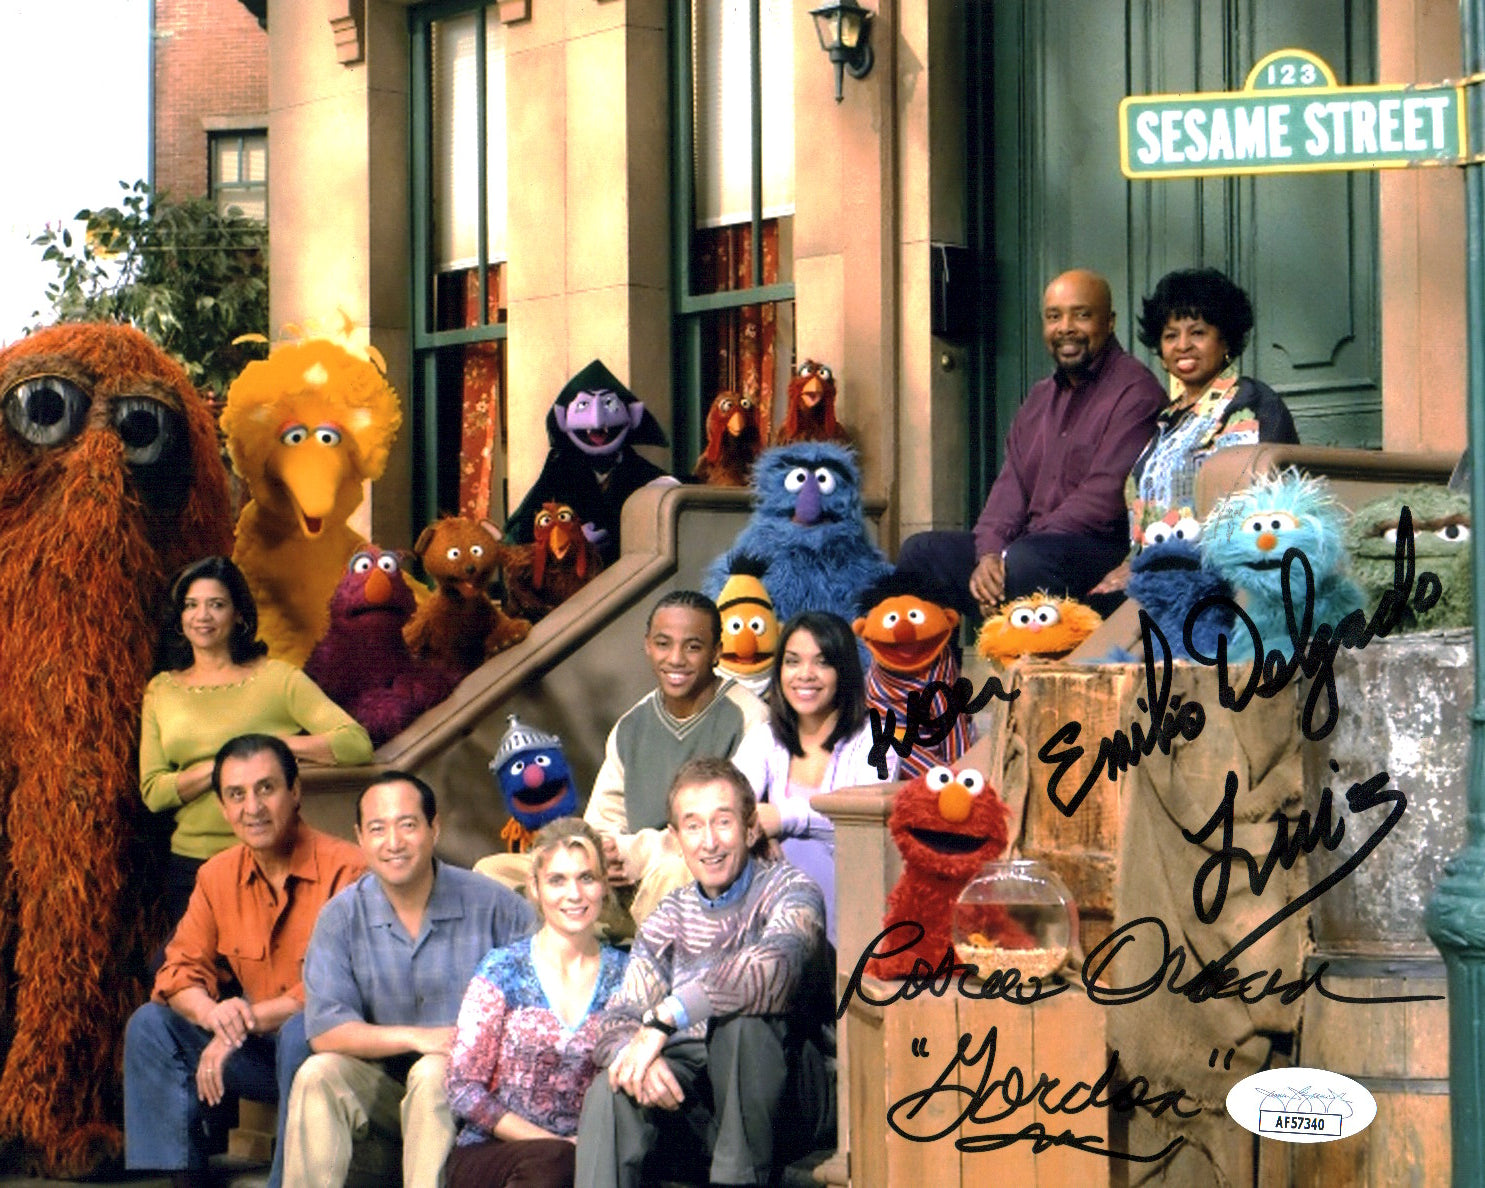 Sesame Street 8x10 Photo Cast x3 Signed Clash, Orman, Delgado JSA Certified Autograph